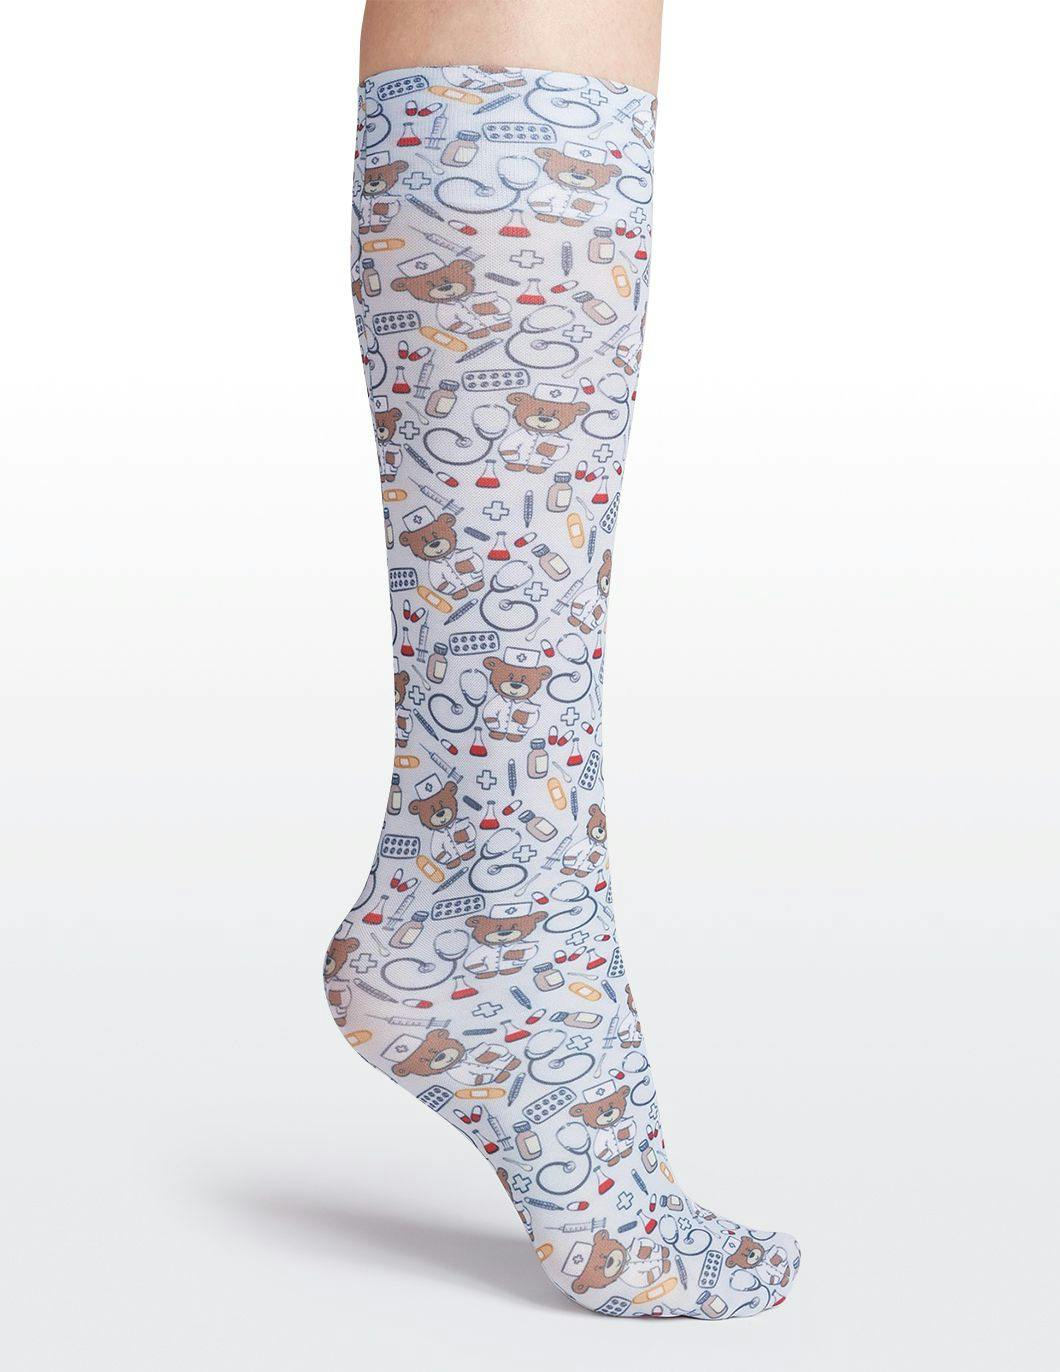 cutieful-compression-socks-nurse-bears-print